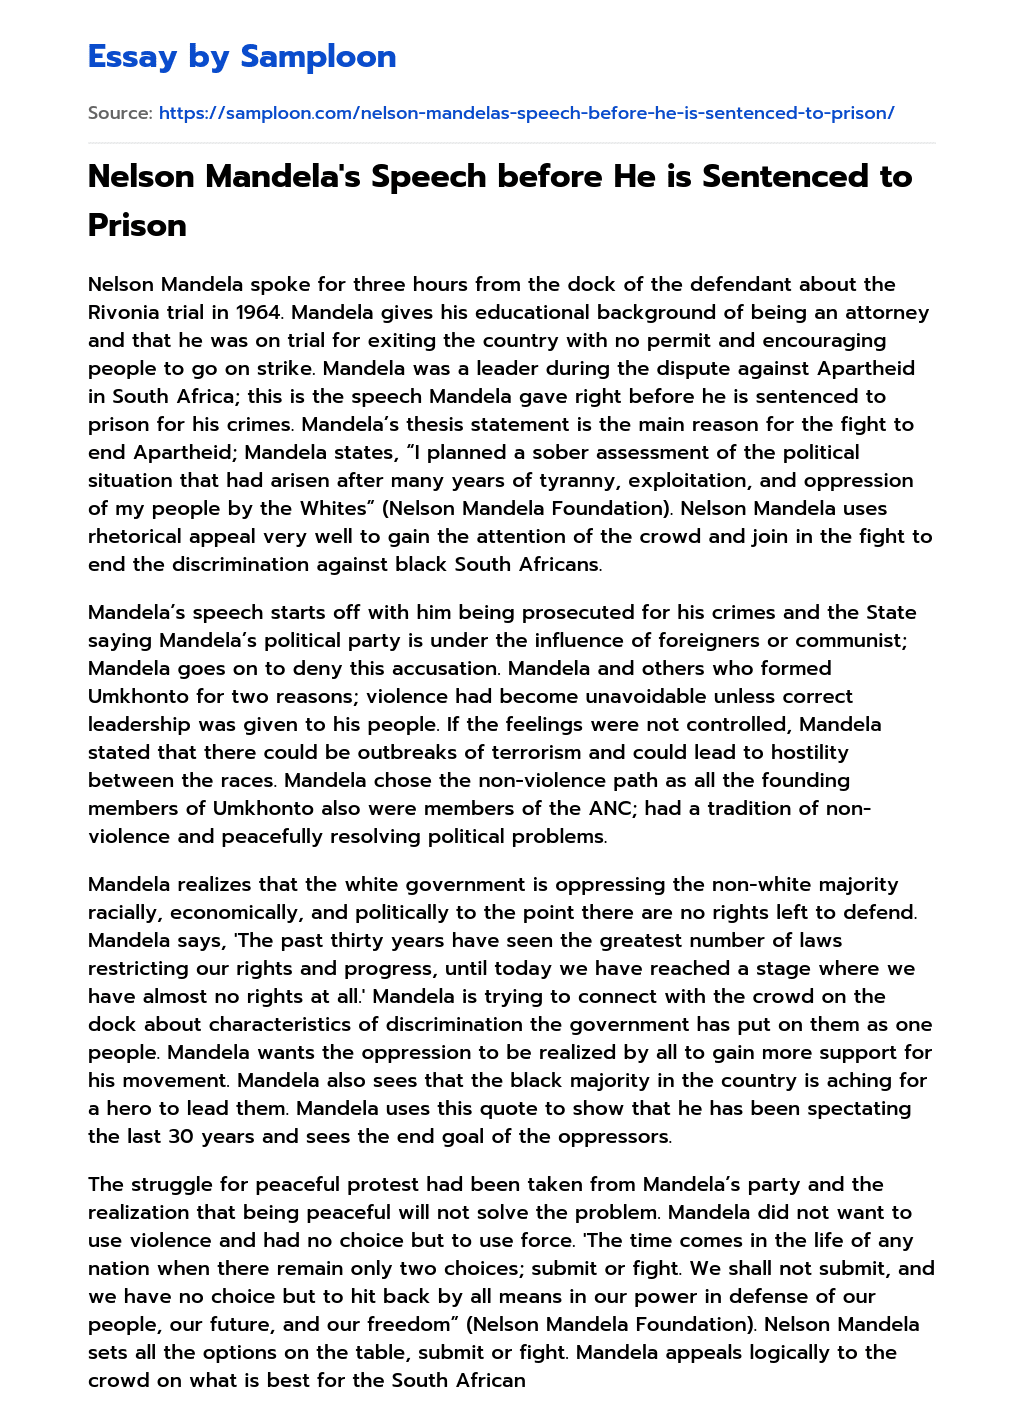 Nelson Mandela’s Speech before He is Sentenced to Prison essay